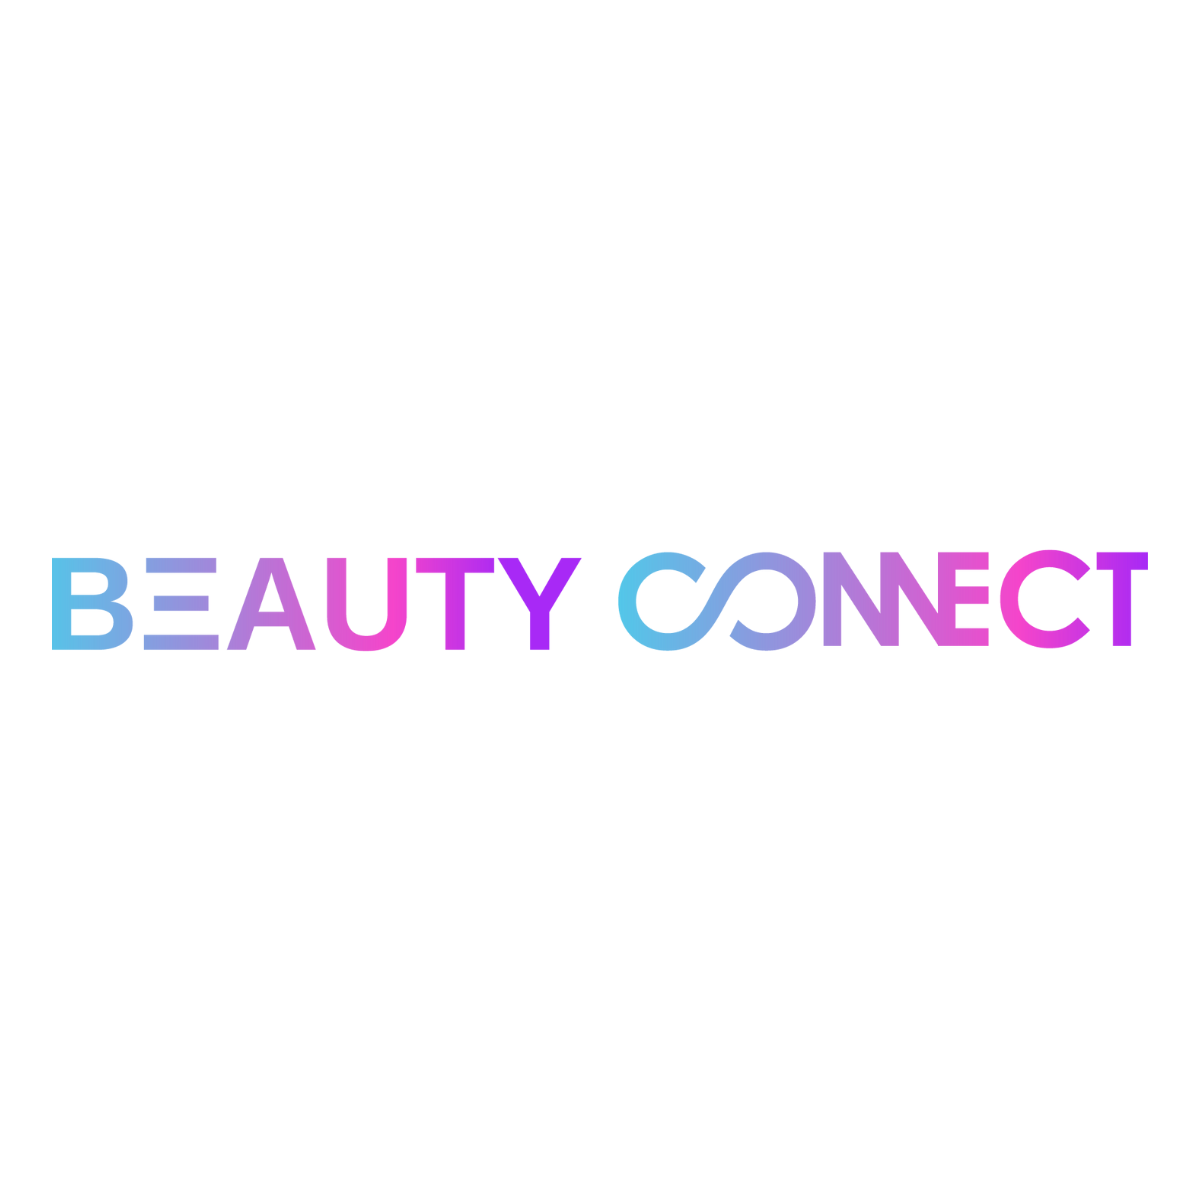 Beauty Connect - November 2-3, 2022